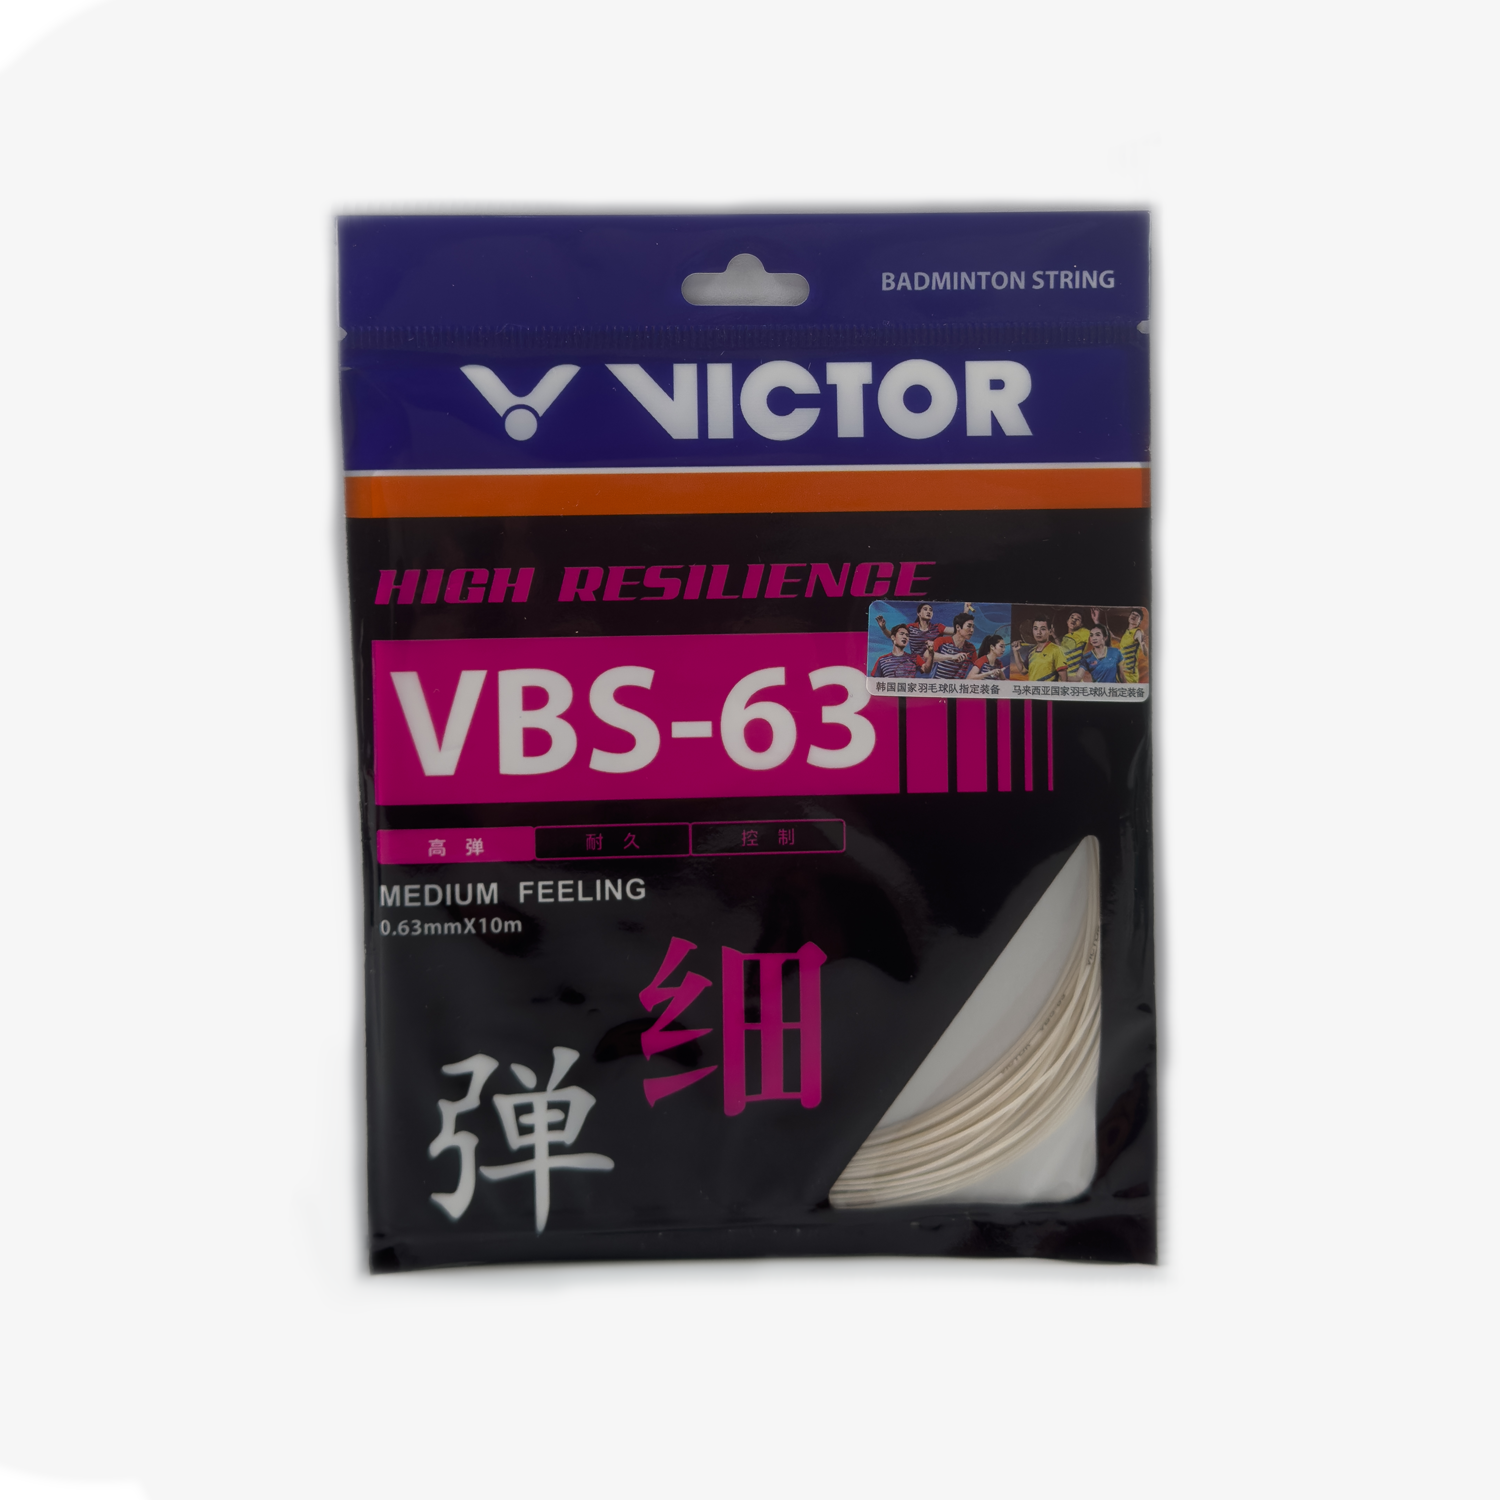 Victor VBS-63 Badminton String